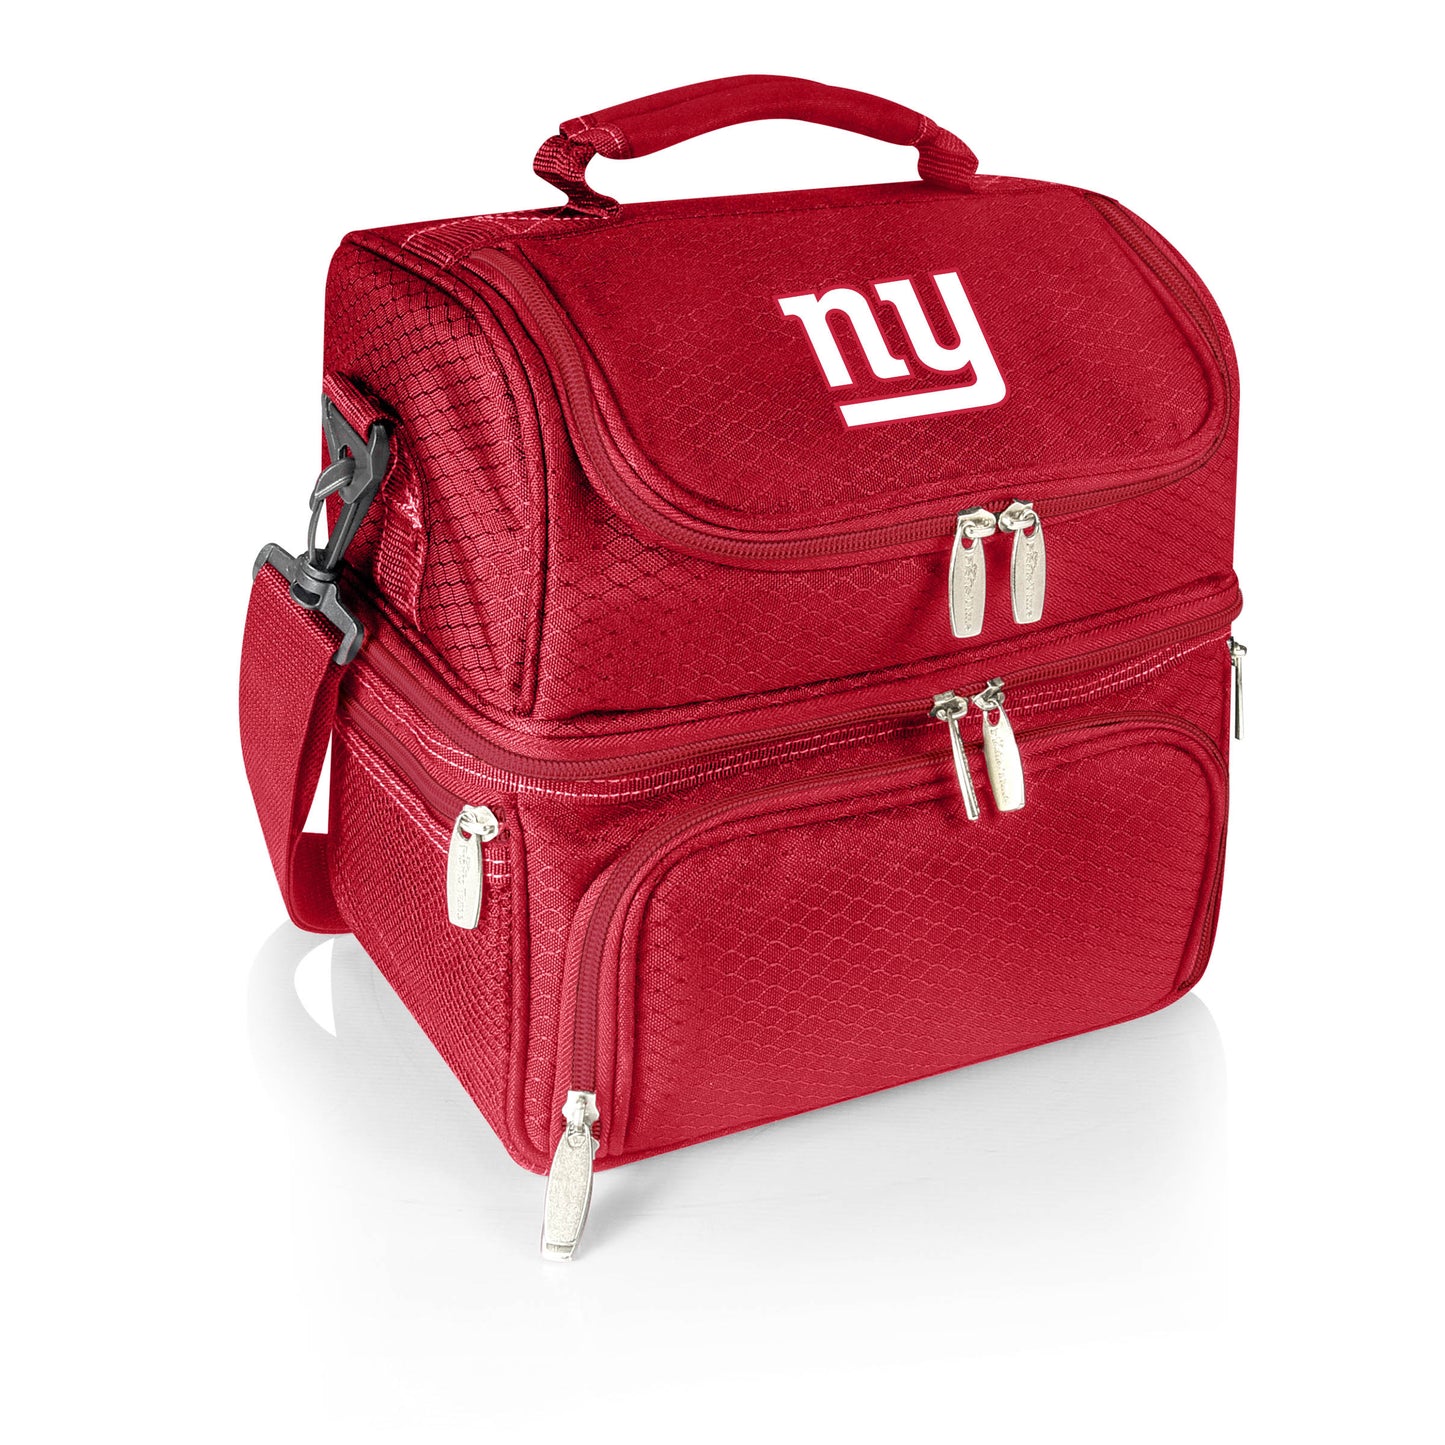 New York Giants - Pranzo Lunch Cooler Bag